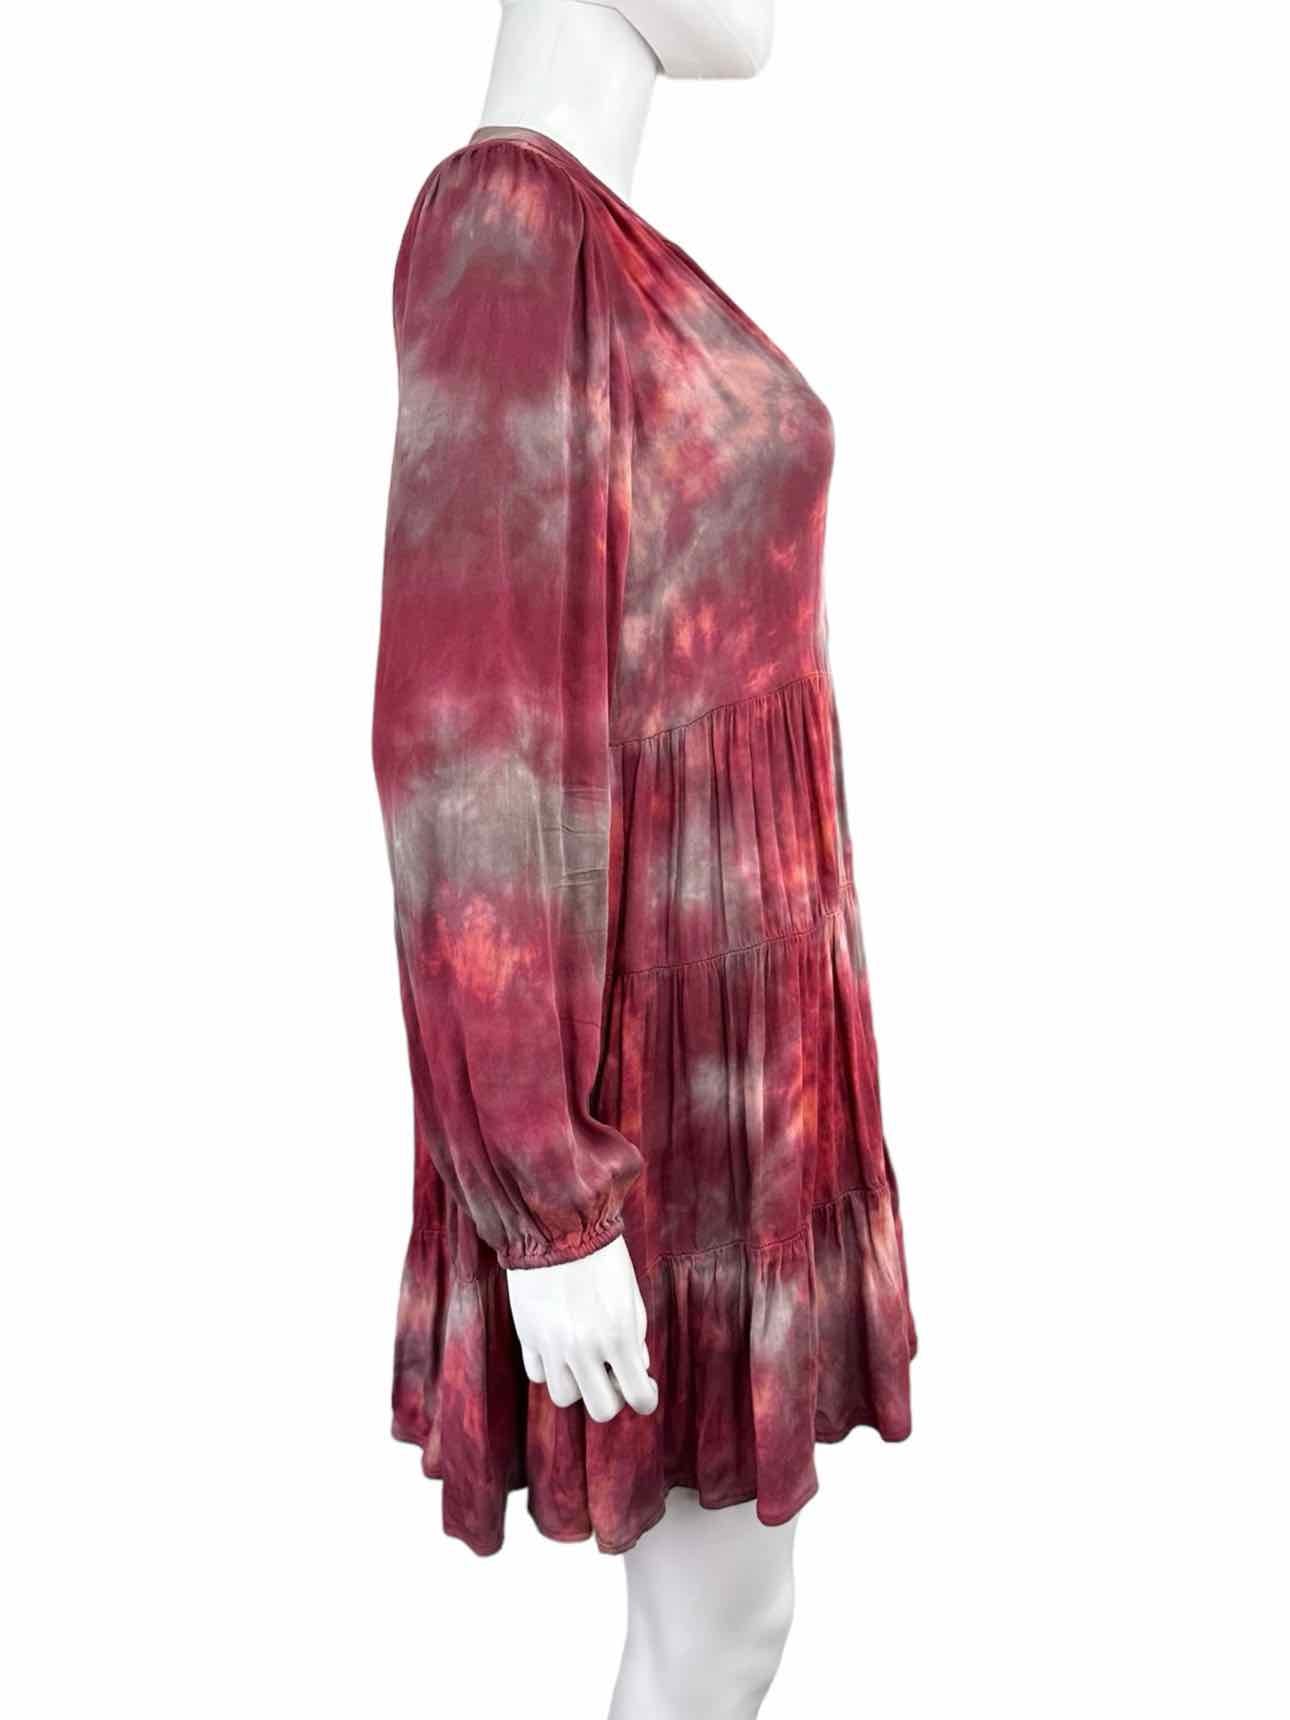 RIVER + SKY Burgundy Tie Dye Babydoll Dress Size XS